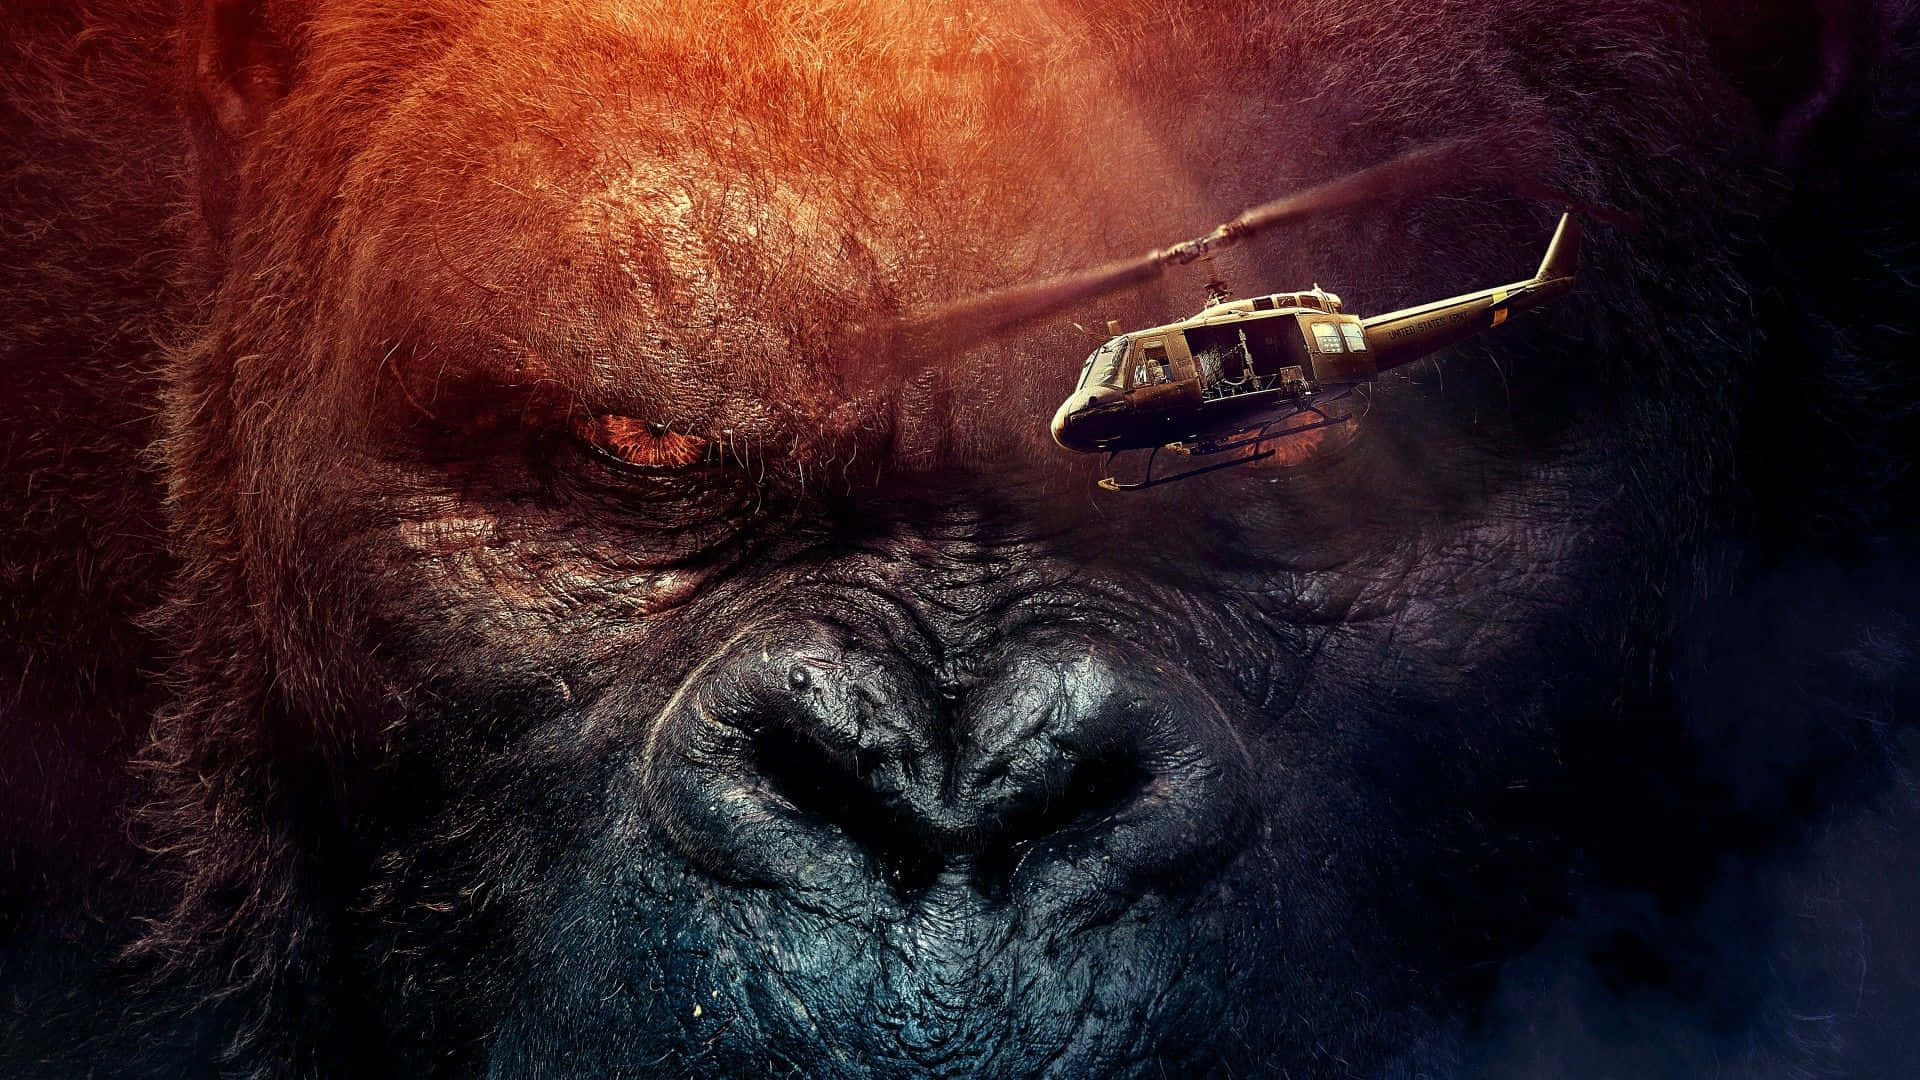 The Gigantic King Kong roars fiercely Wallpaper